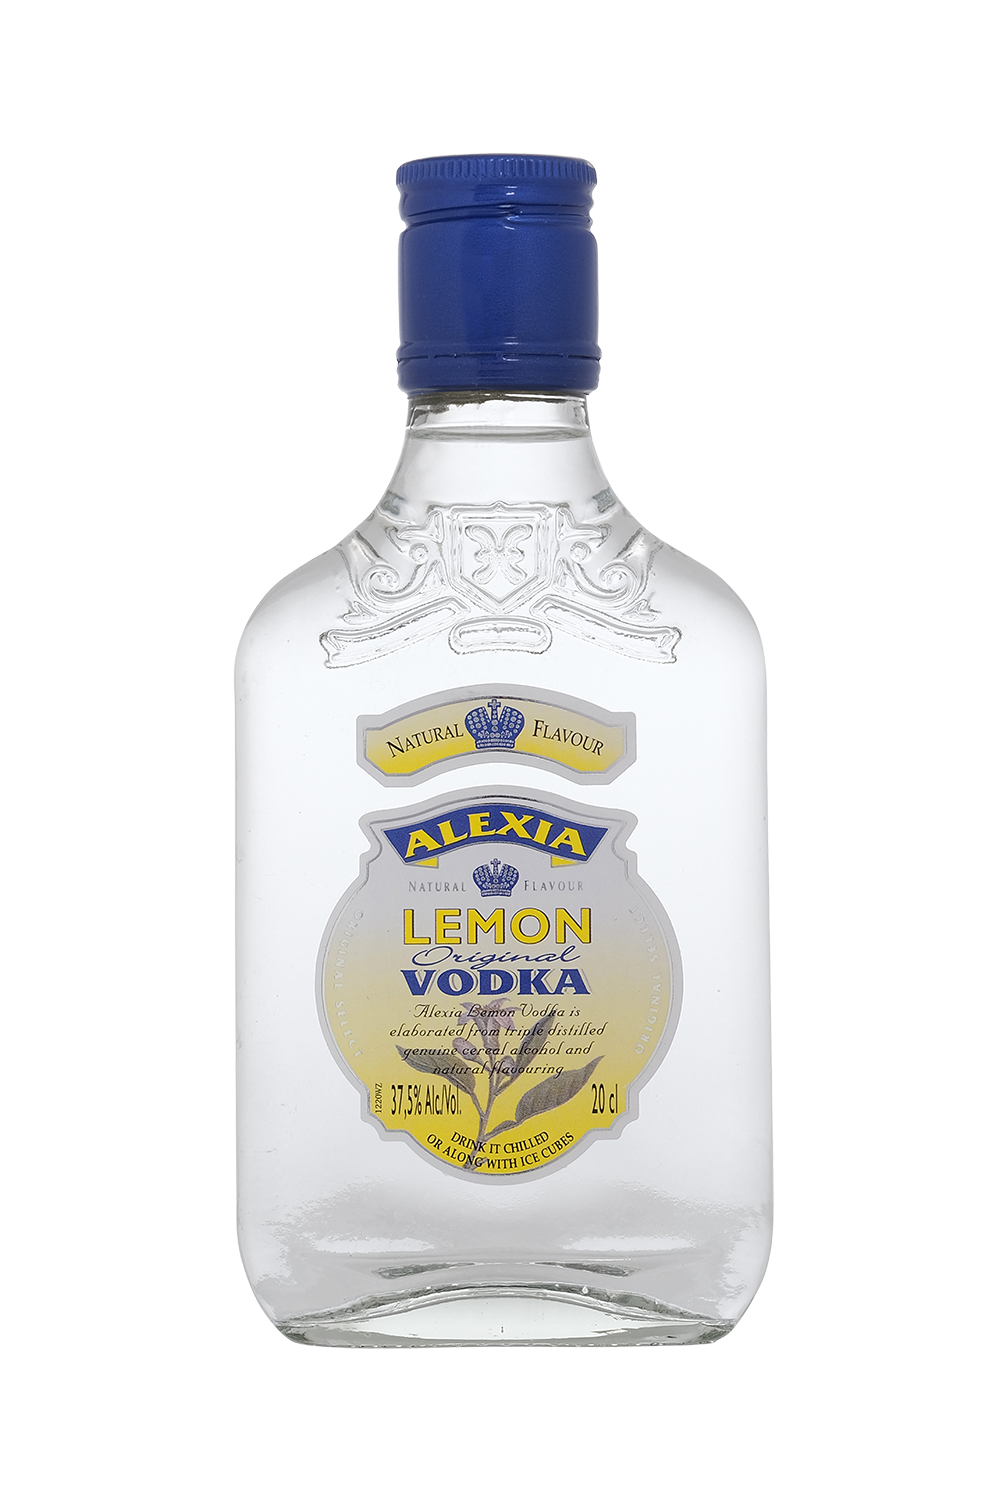 Vodka Lemon Alexia 020 37.5 0V9G Web